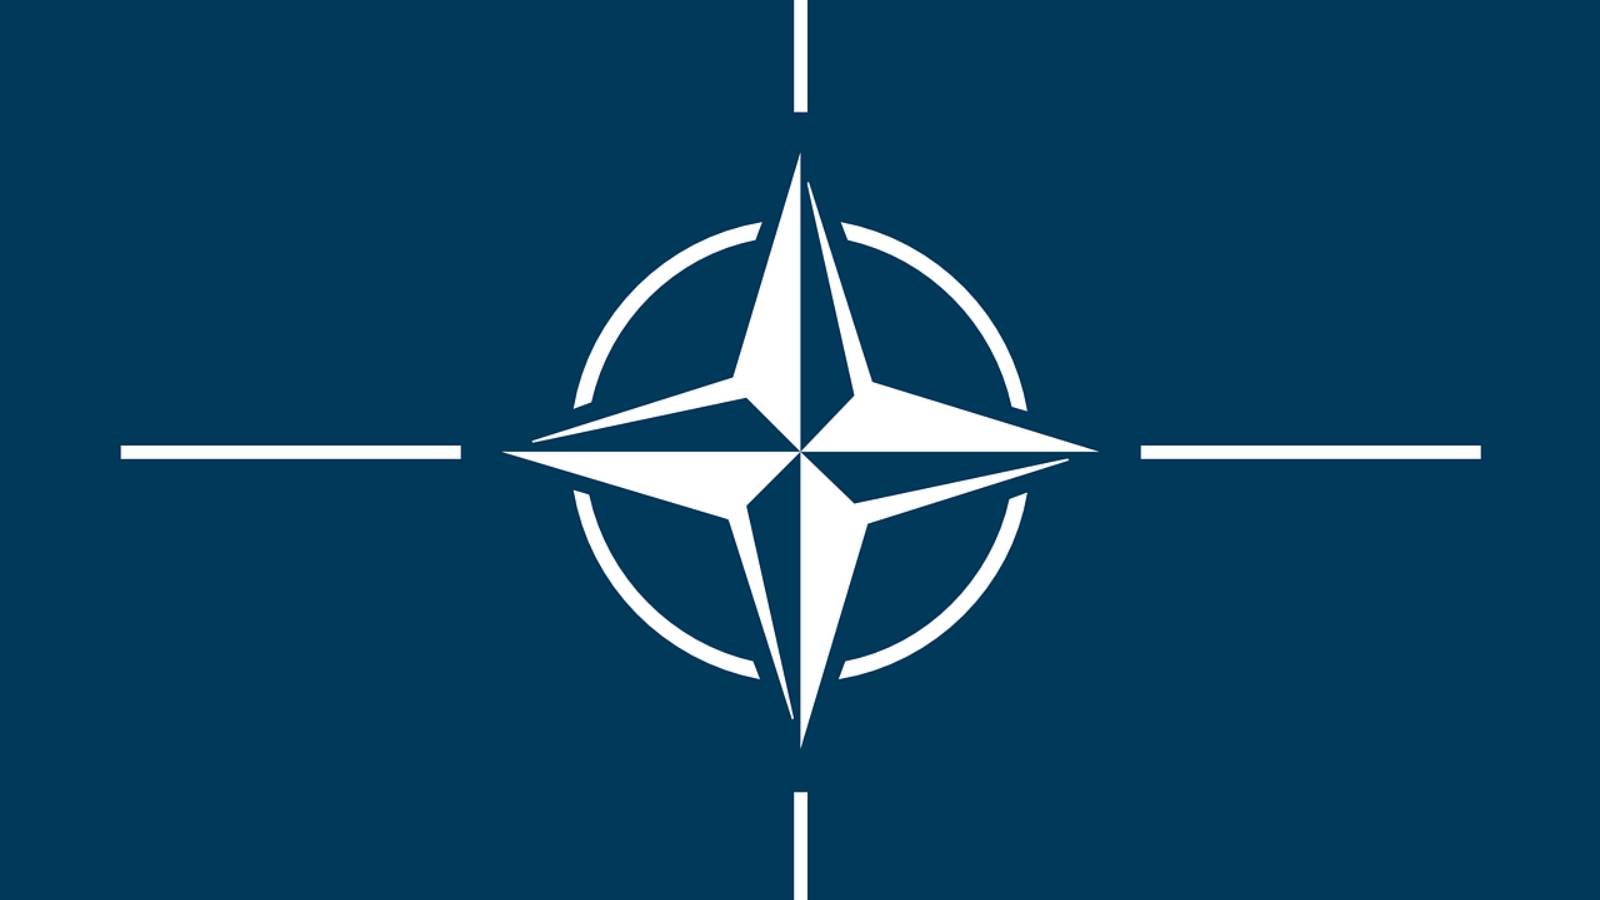 NATO a fost Amenintata cu Razboiul Nuclear de catre Rusia